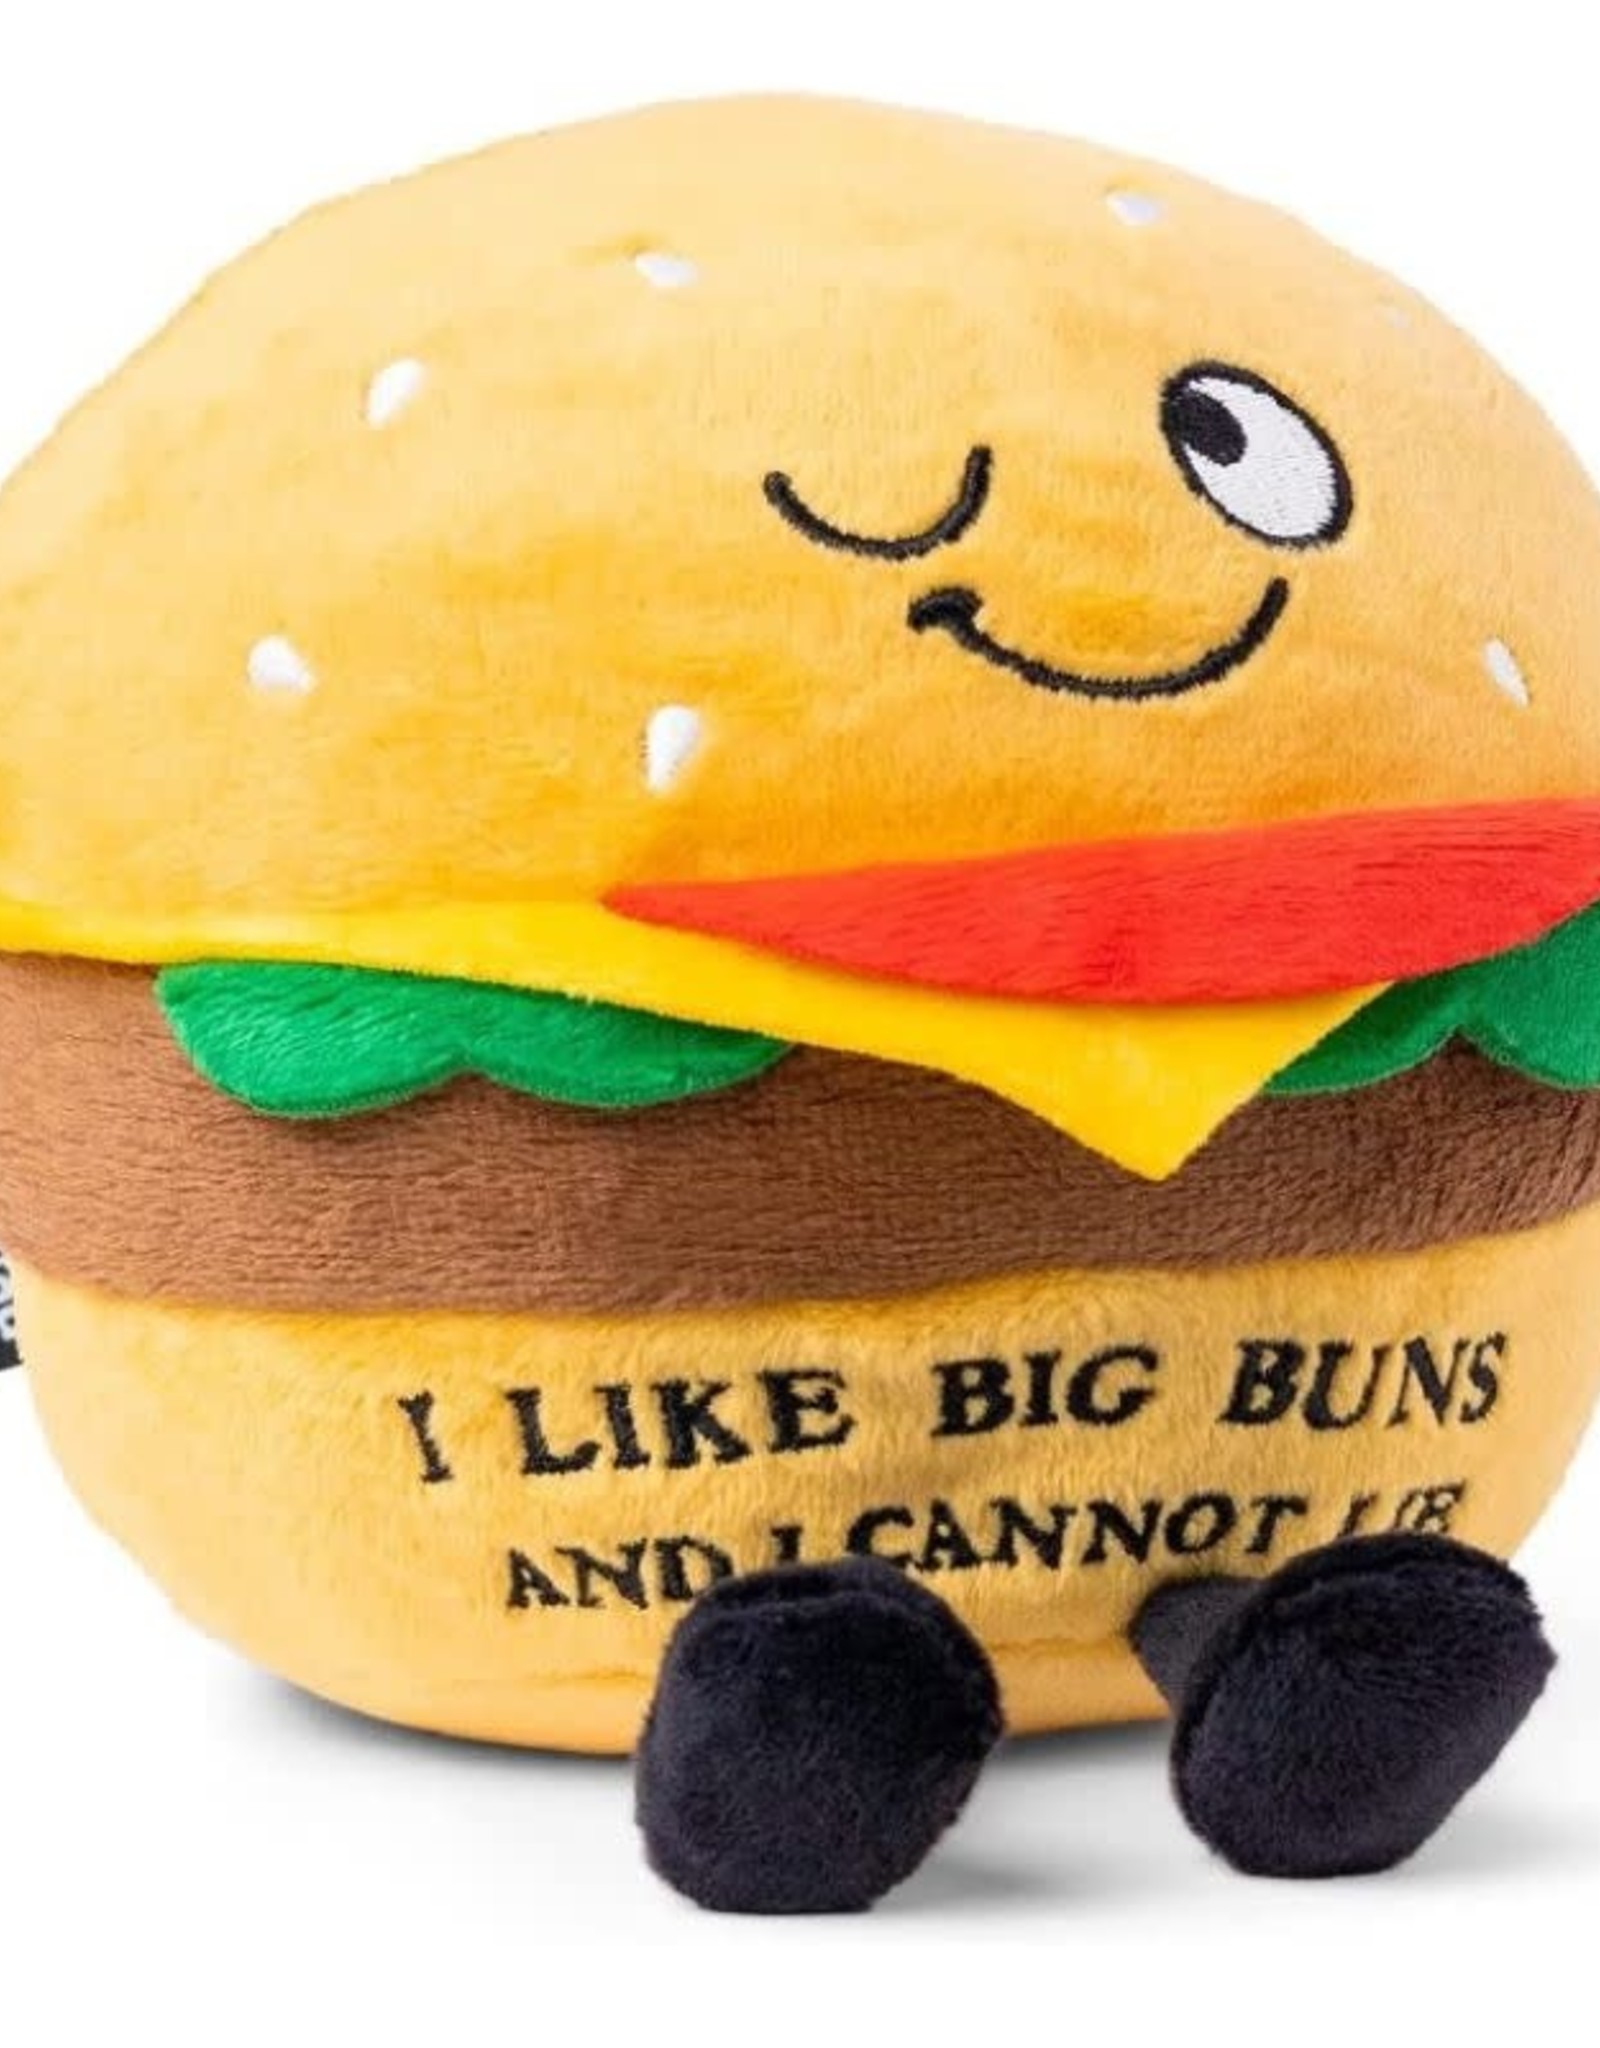 Punchkins Burger - I Like Big Buns